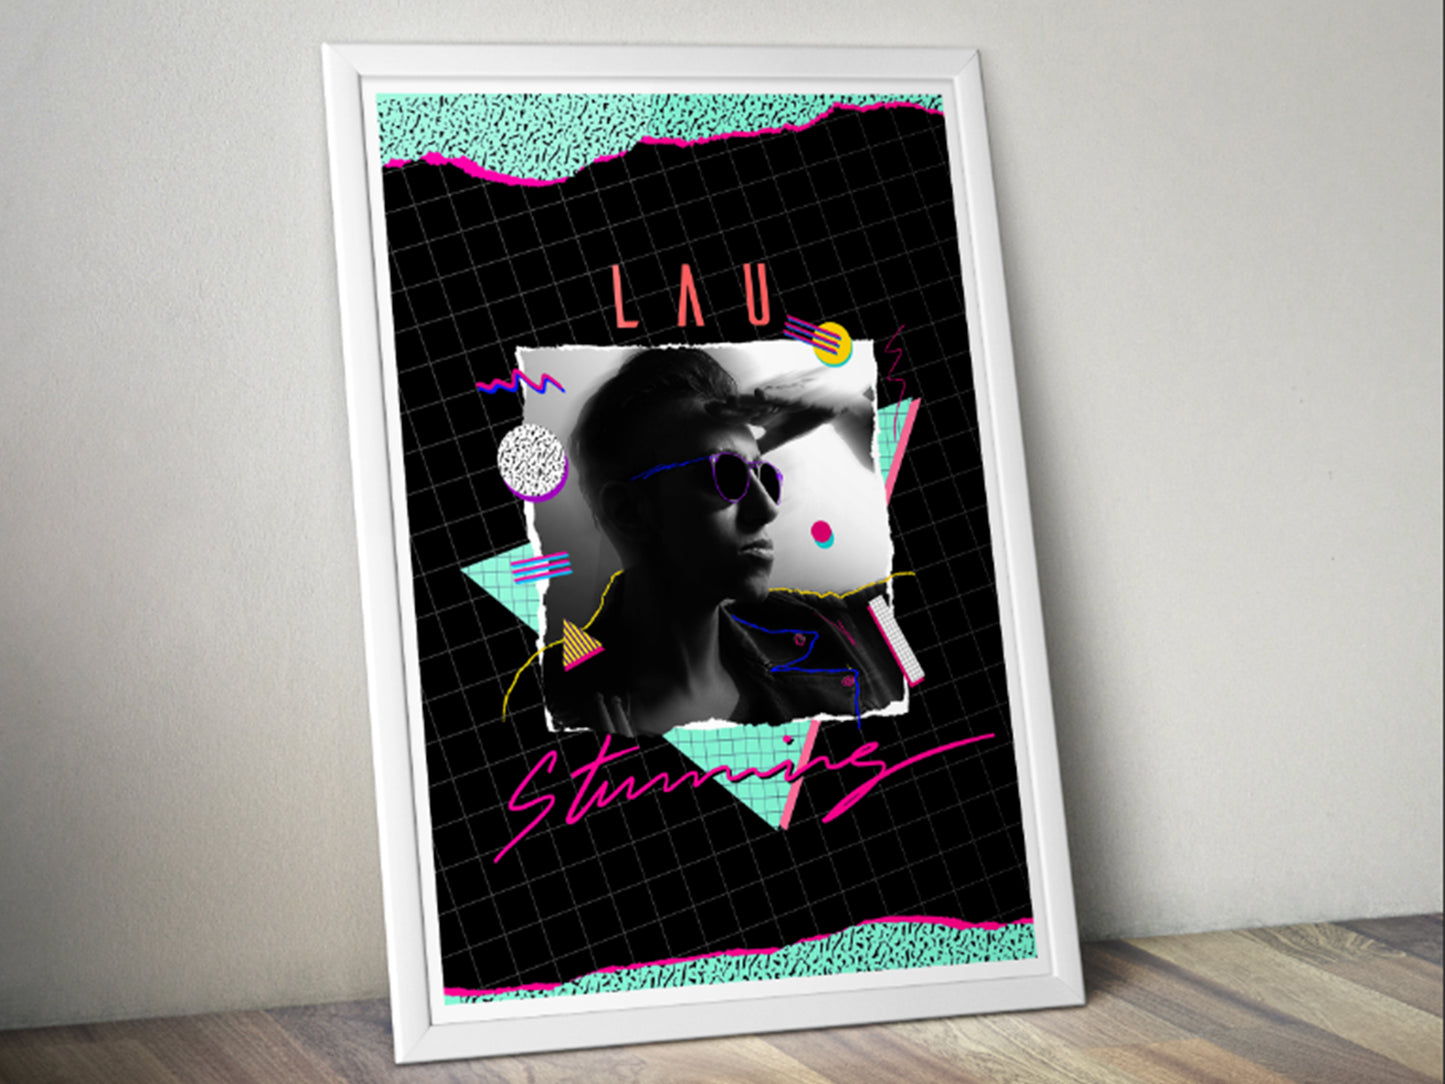 LAU - Stunning Poster Print A2 (Gloss) 130gsm